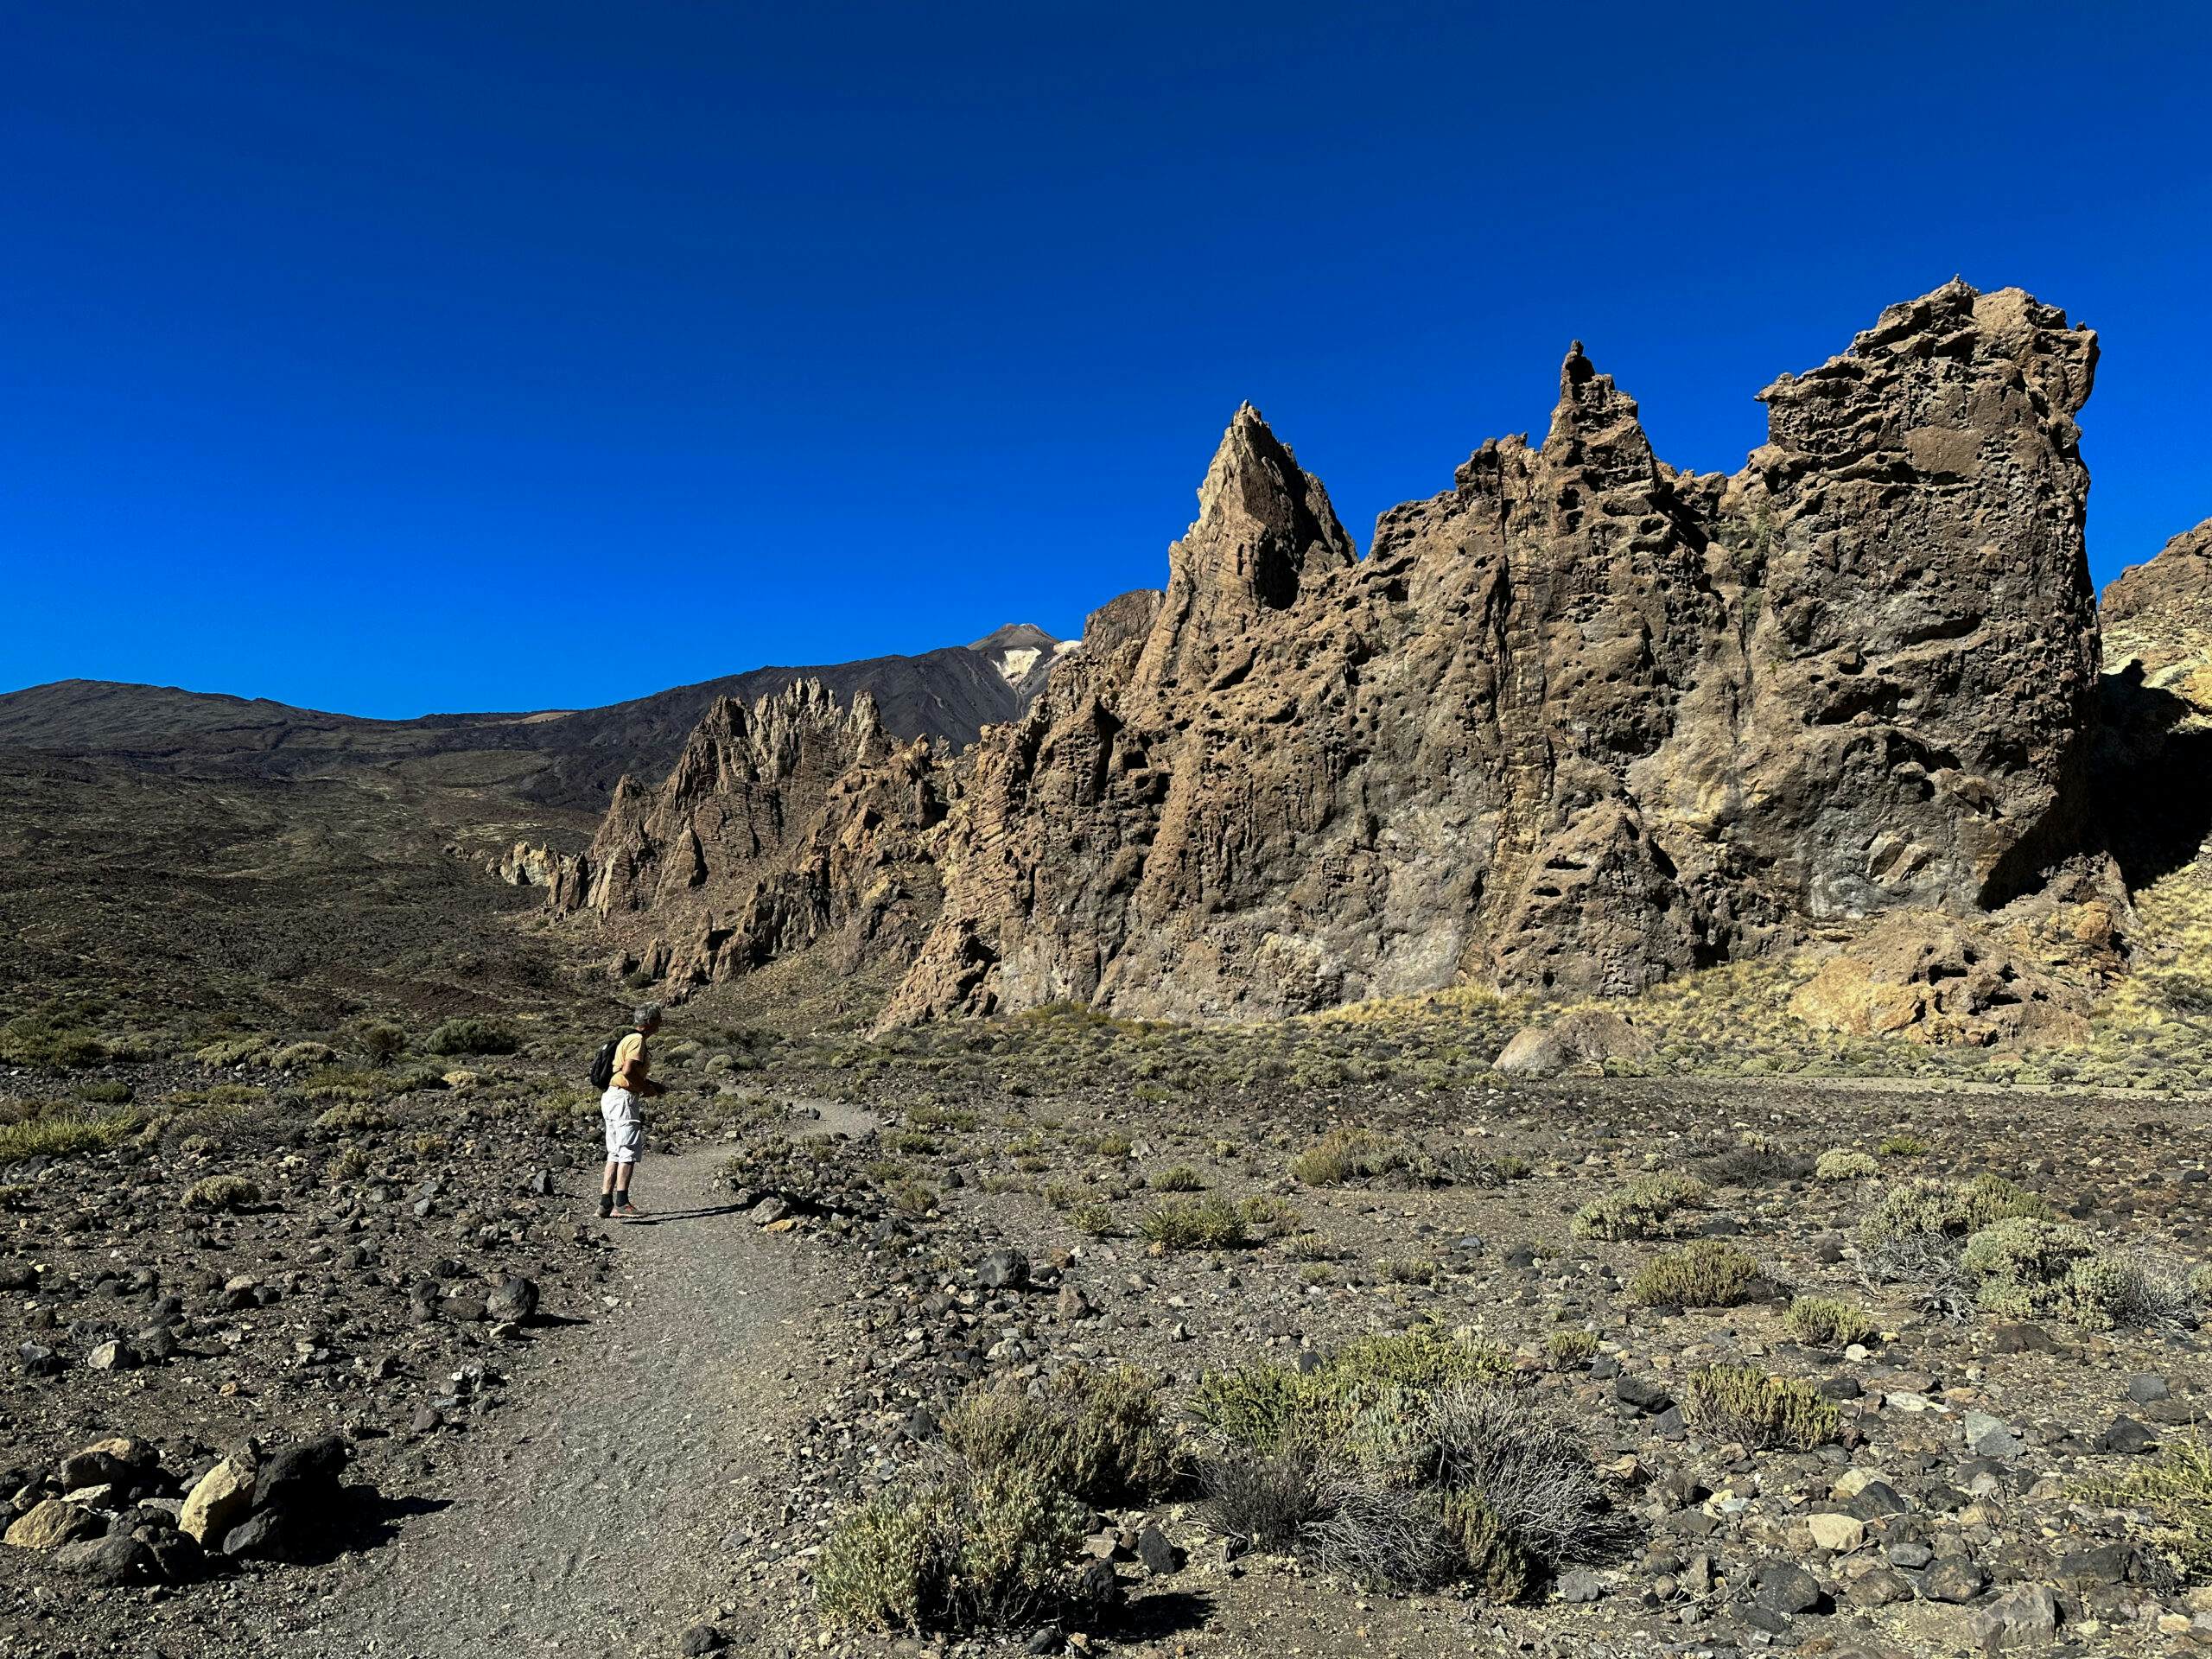 Hiking trail through the Llano de Ucanca - Pico del Teide in the background